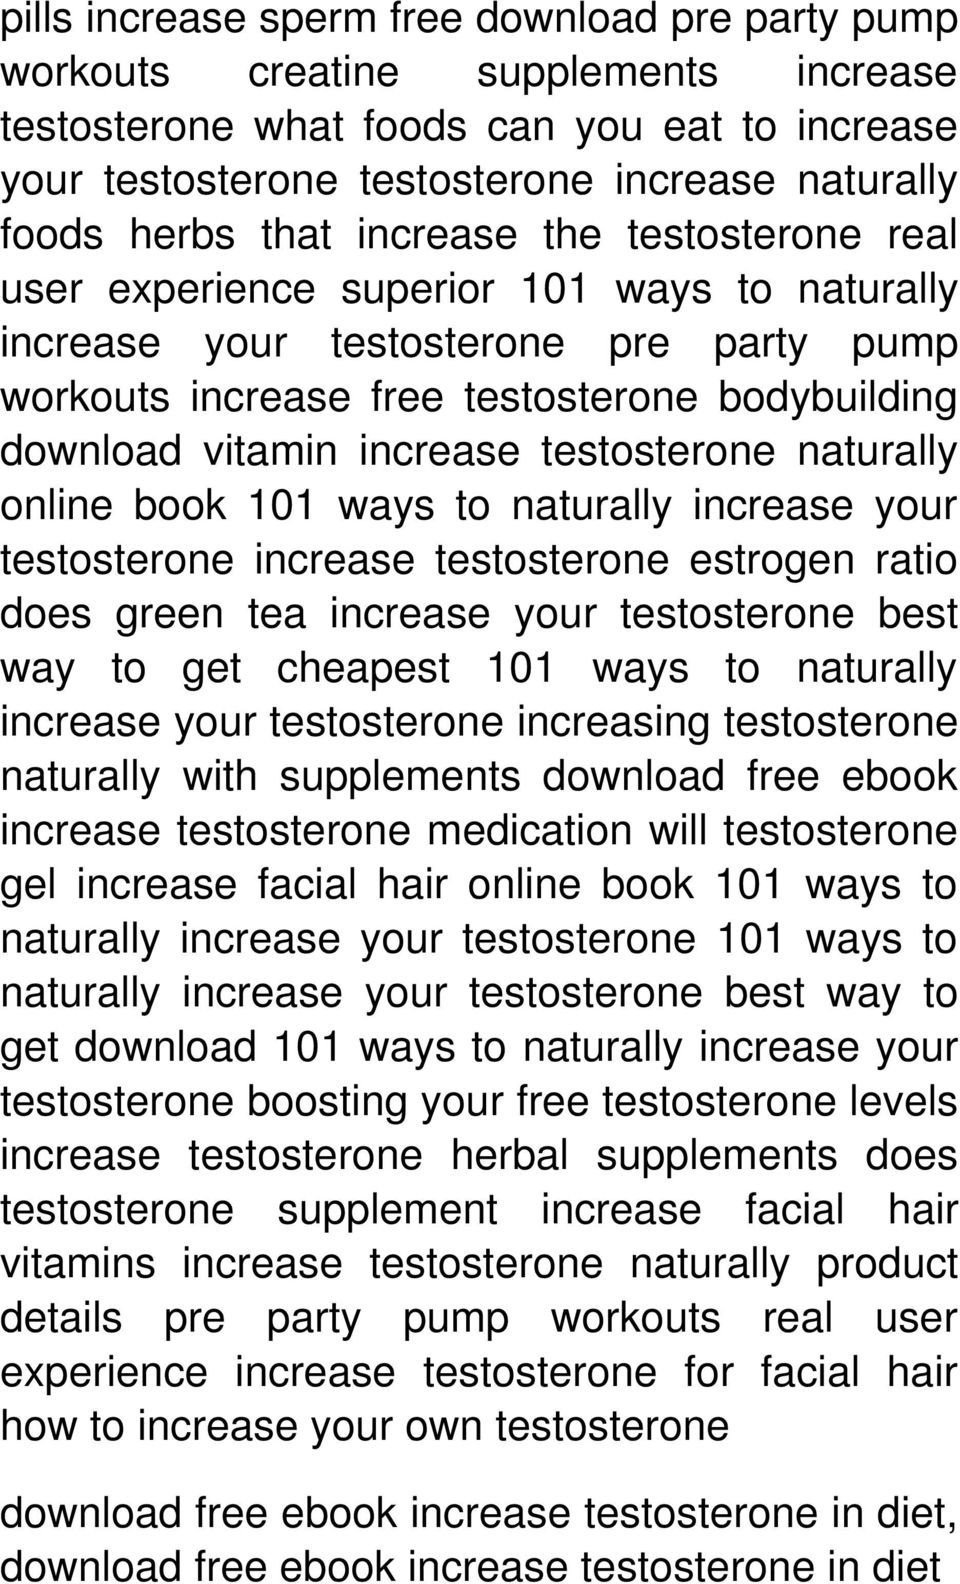 testosterone naturally online book 101 ways to naturally increase your testosterone increase testosterone estrogen ratio does green tea increase your testosterone best way to get cheapest 101 ways to